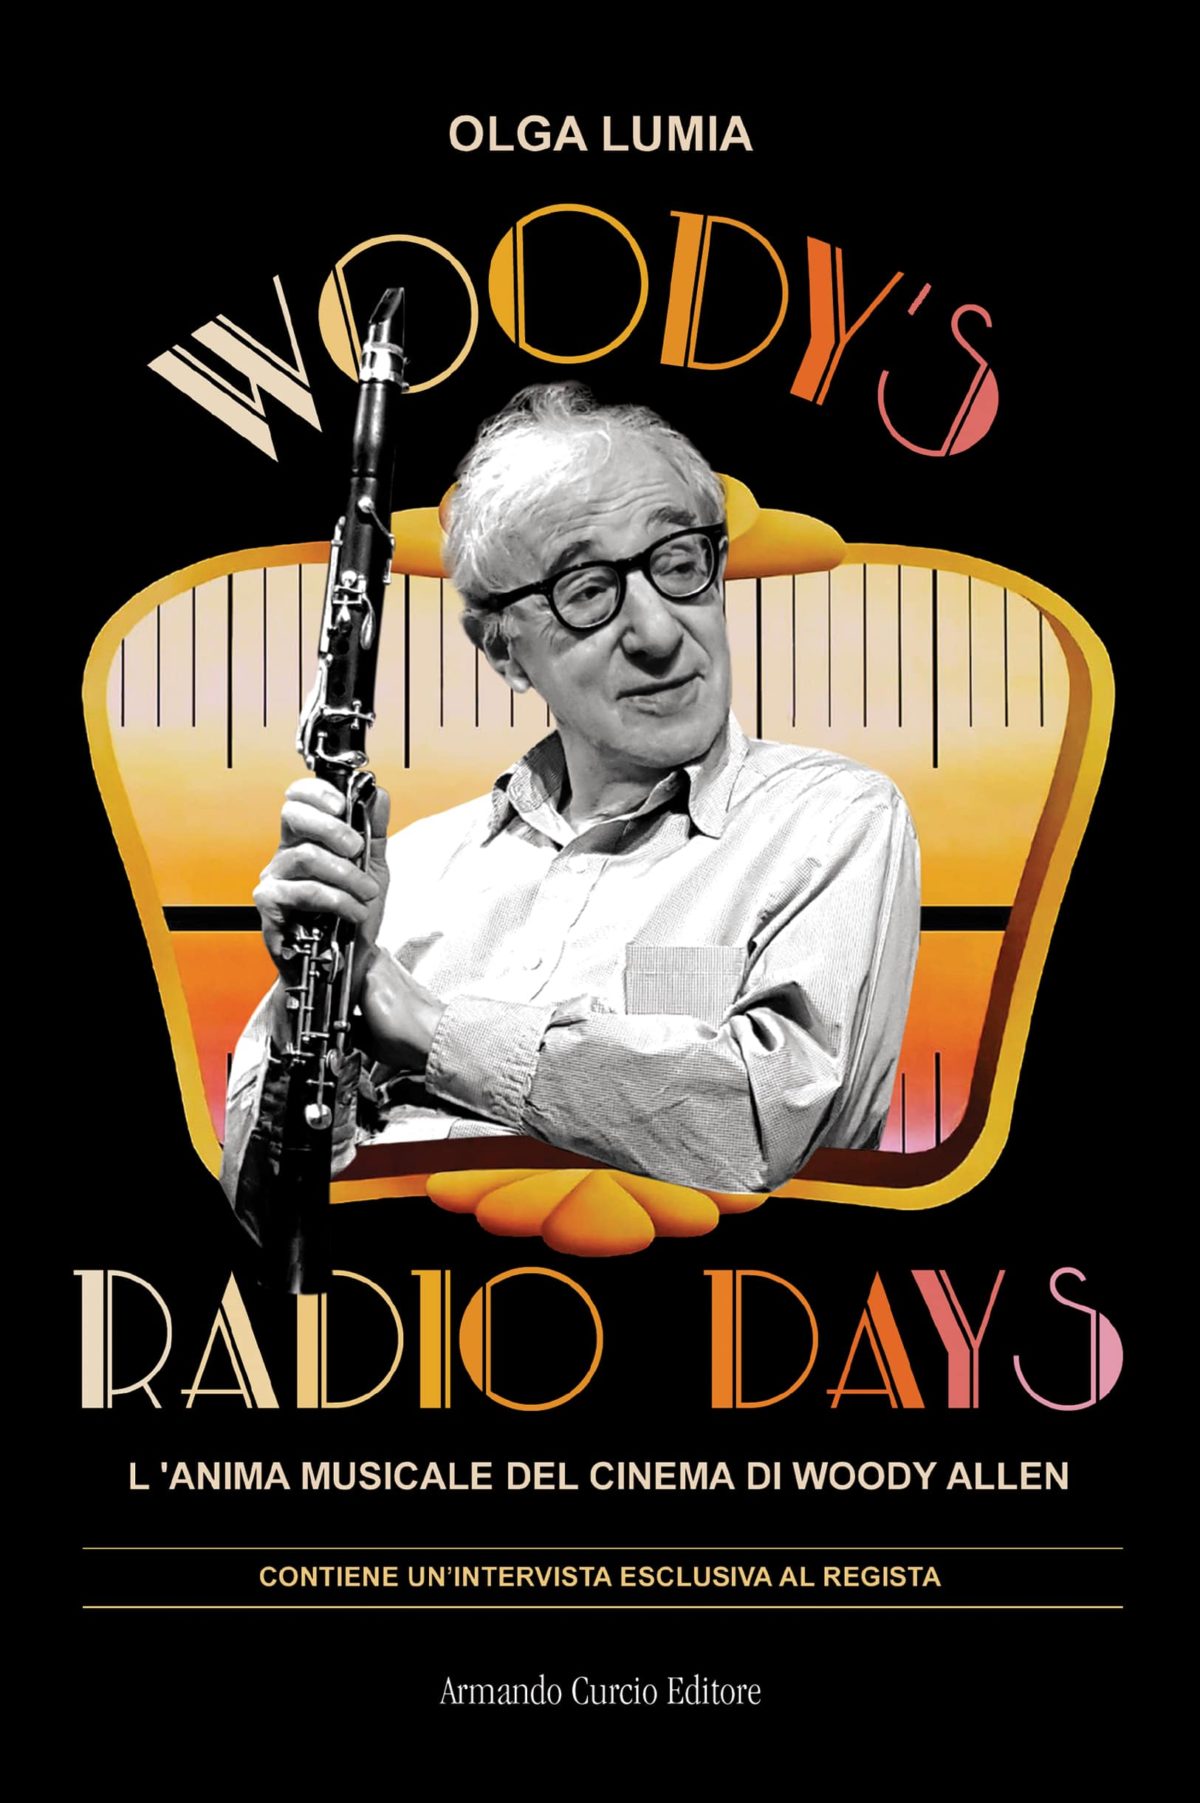 Woody's Radio Days